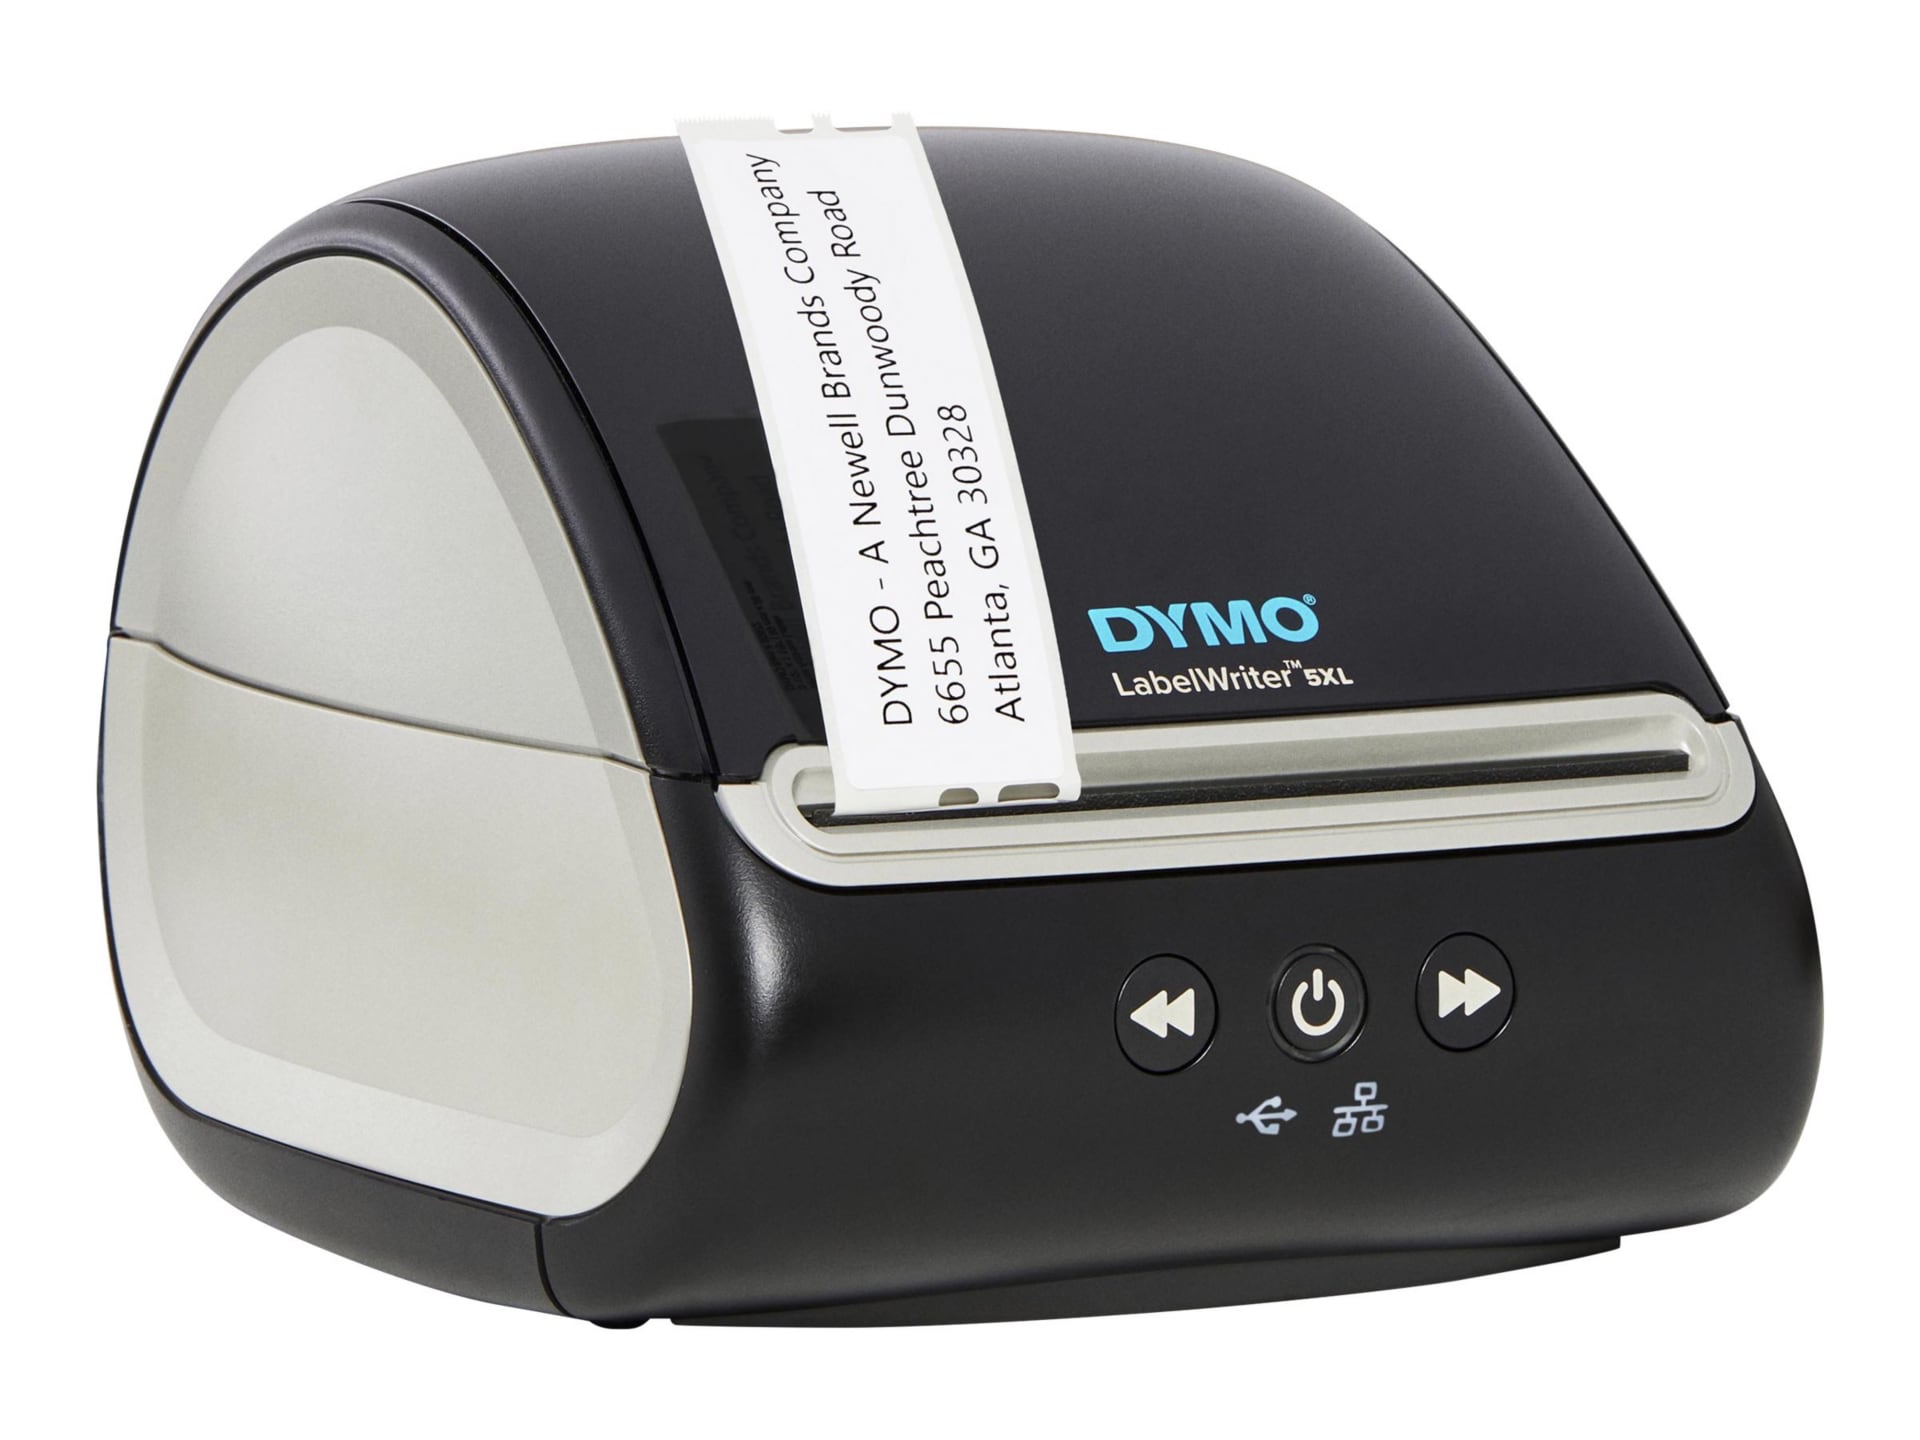 DYMO LabelWriter label printer - B/W - direct thermal - 2112554 - Label Printers - CDW.com